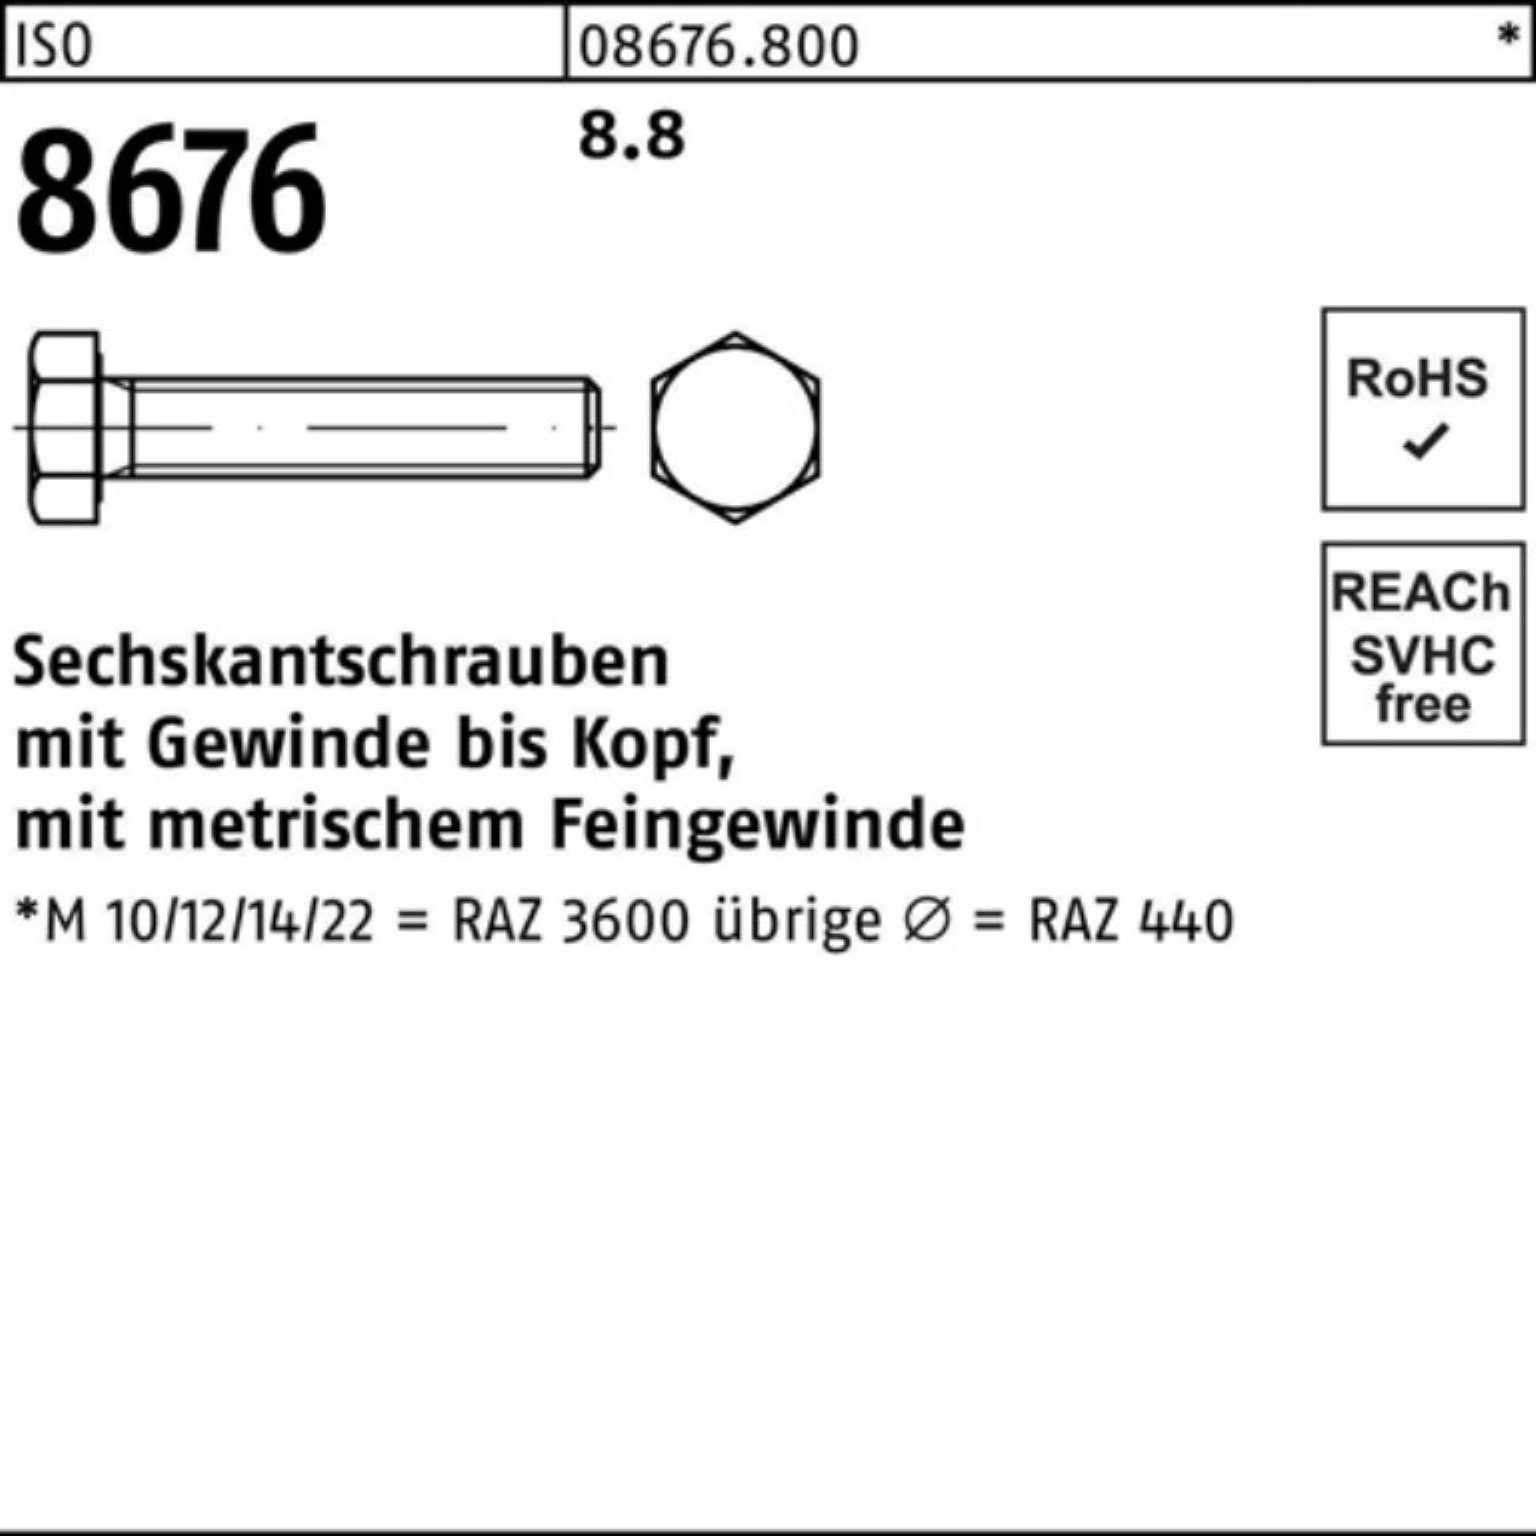 Sechskantschraube 1 VG Pack M30x2x140 8.8 ISO ISO 86 8676 Reyher 100er Stück Sechskantschraube